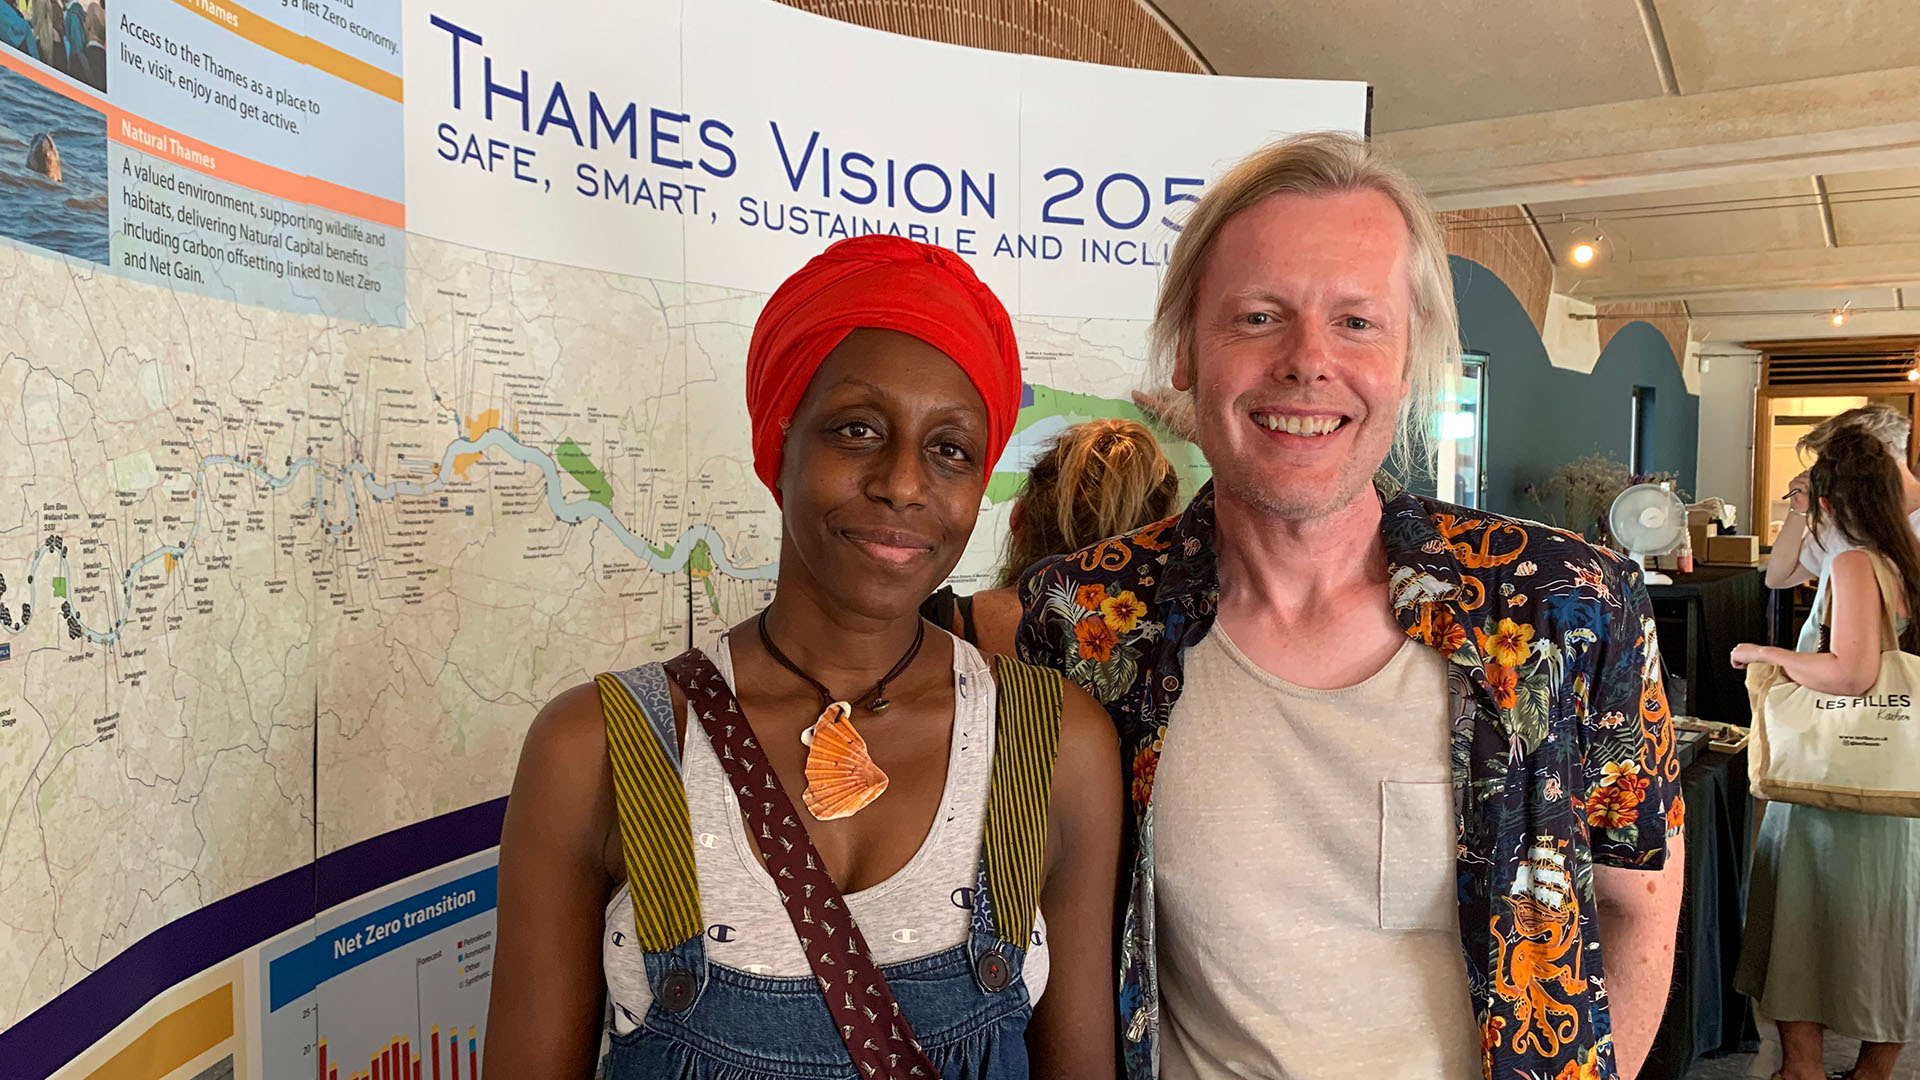 Remiiya Badru and Paul Wyatt with Thames Vision 2050 banner behind them